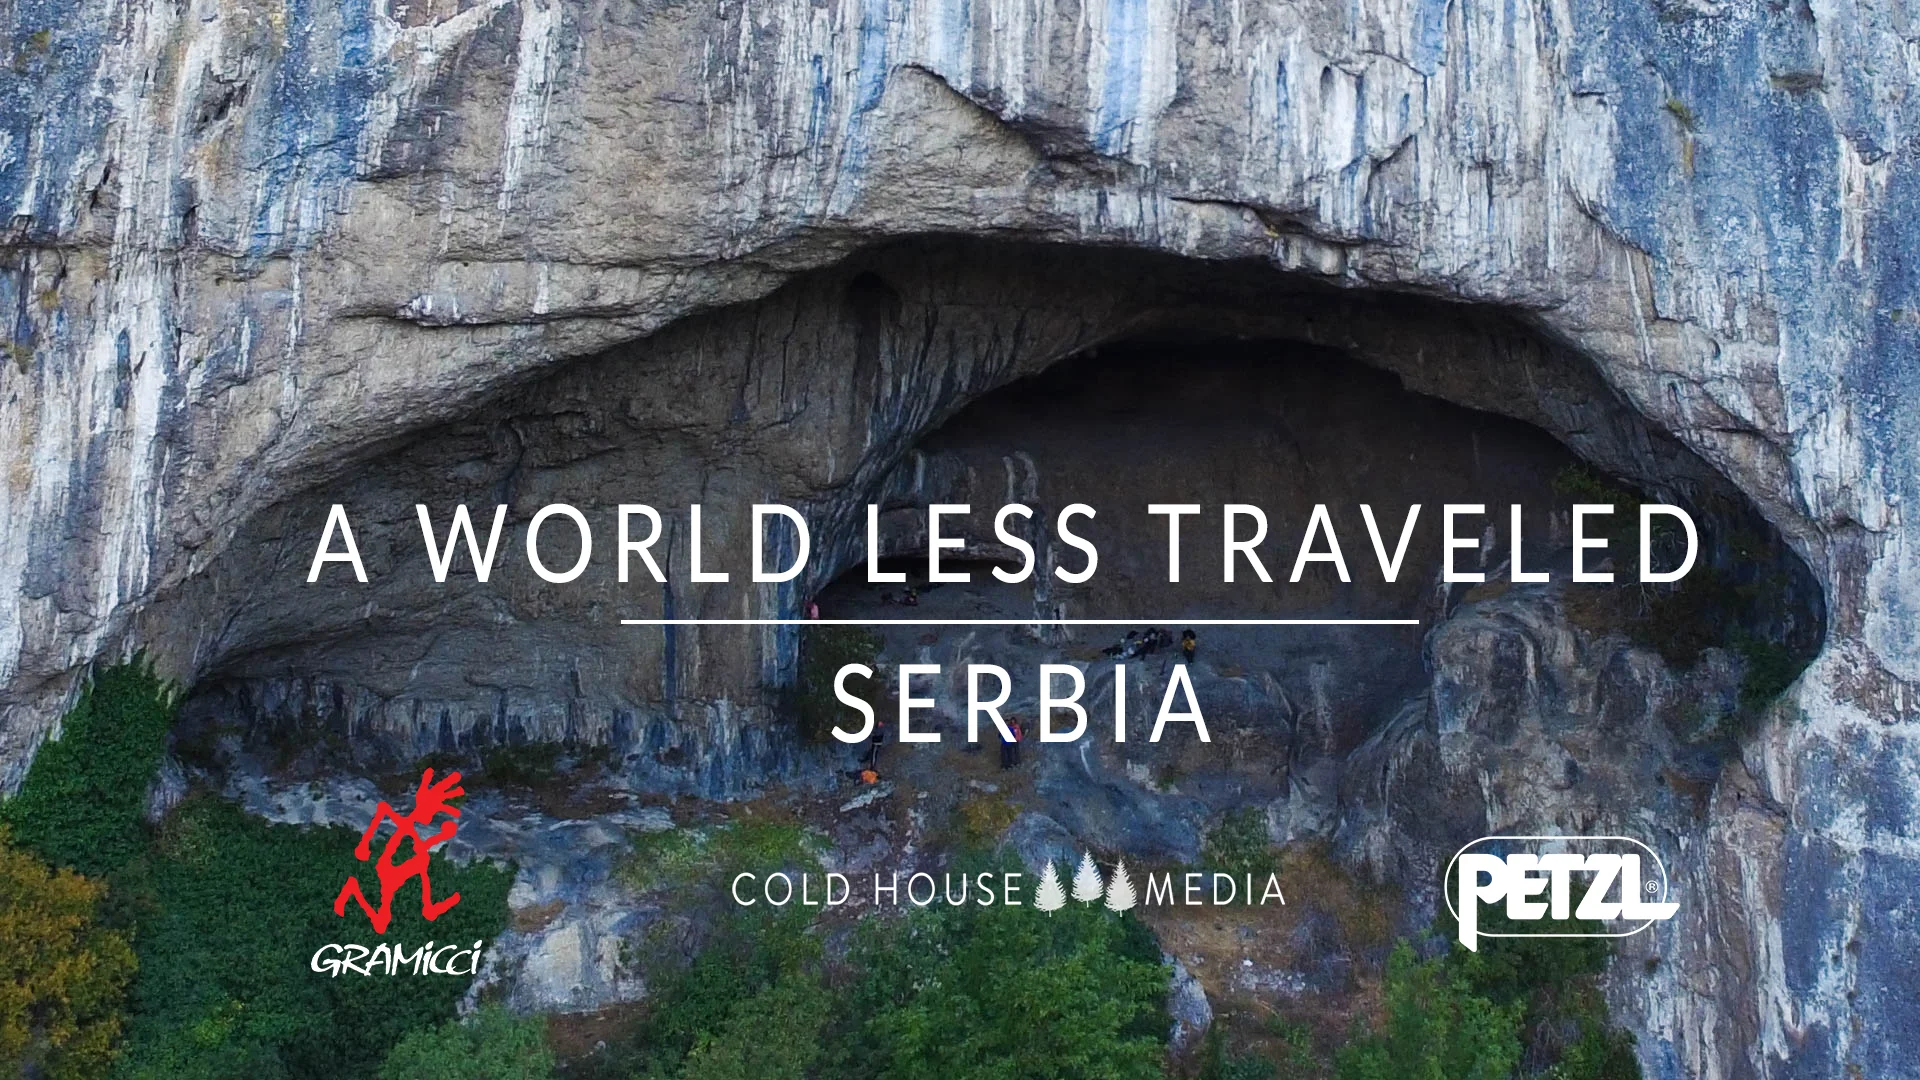 Travelled или traveled. Destination Serbia 1. She traveled the world